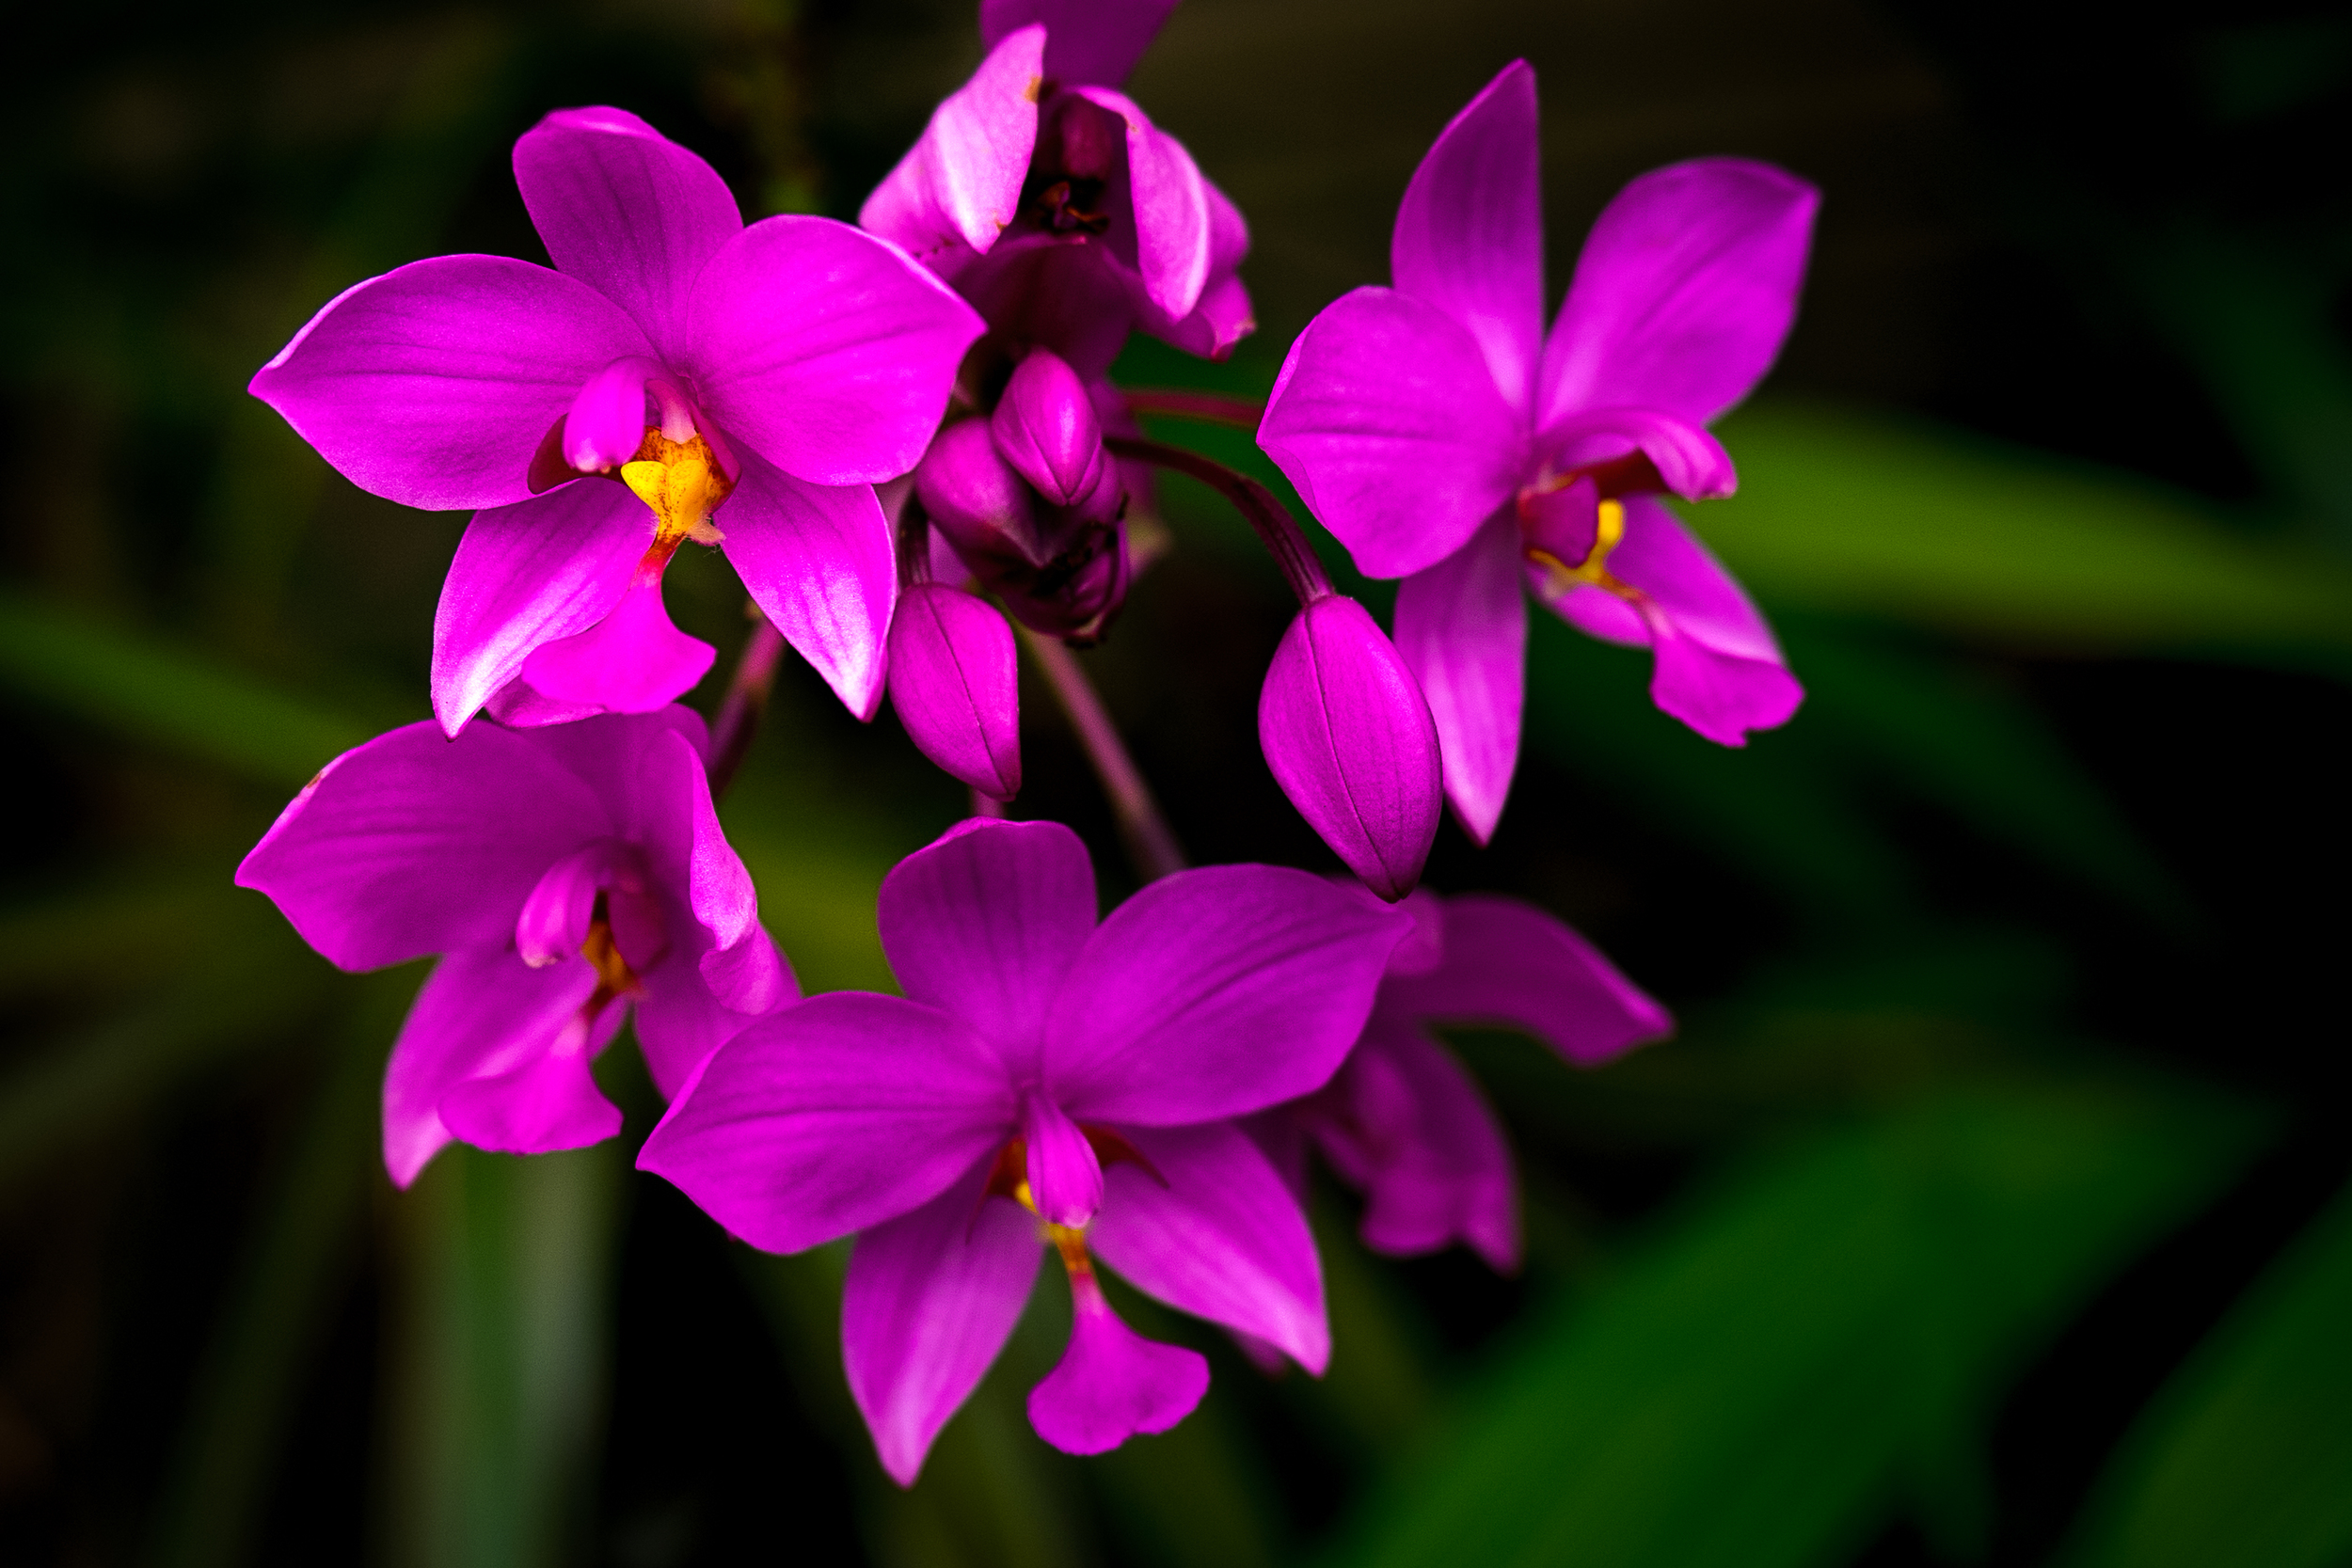 "Filipino Ground Orchids"